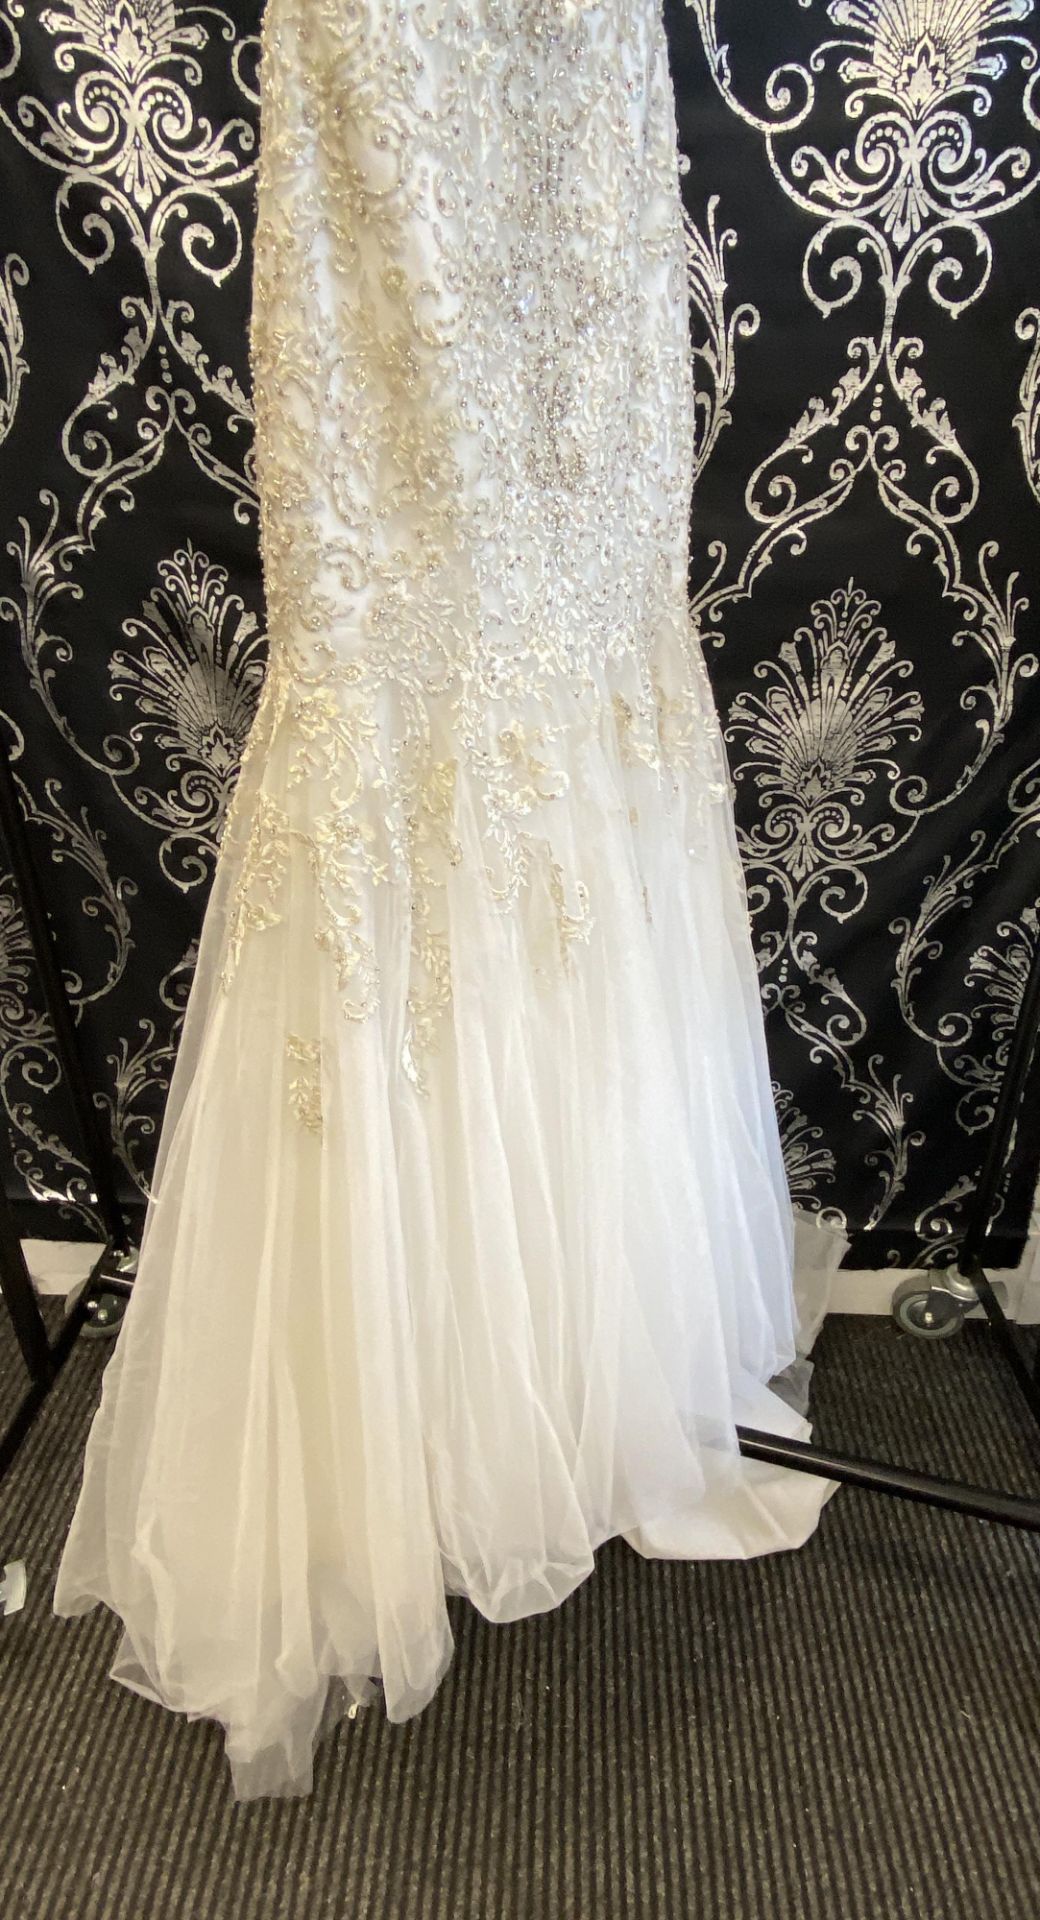 1 x ALLURE '9275' Timeless Strapless Lace And Chiffon Mermaid Designer Wedding Dress RRP £2,250 UK12 - Image 6 of 11